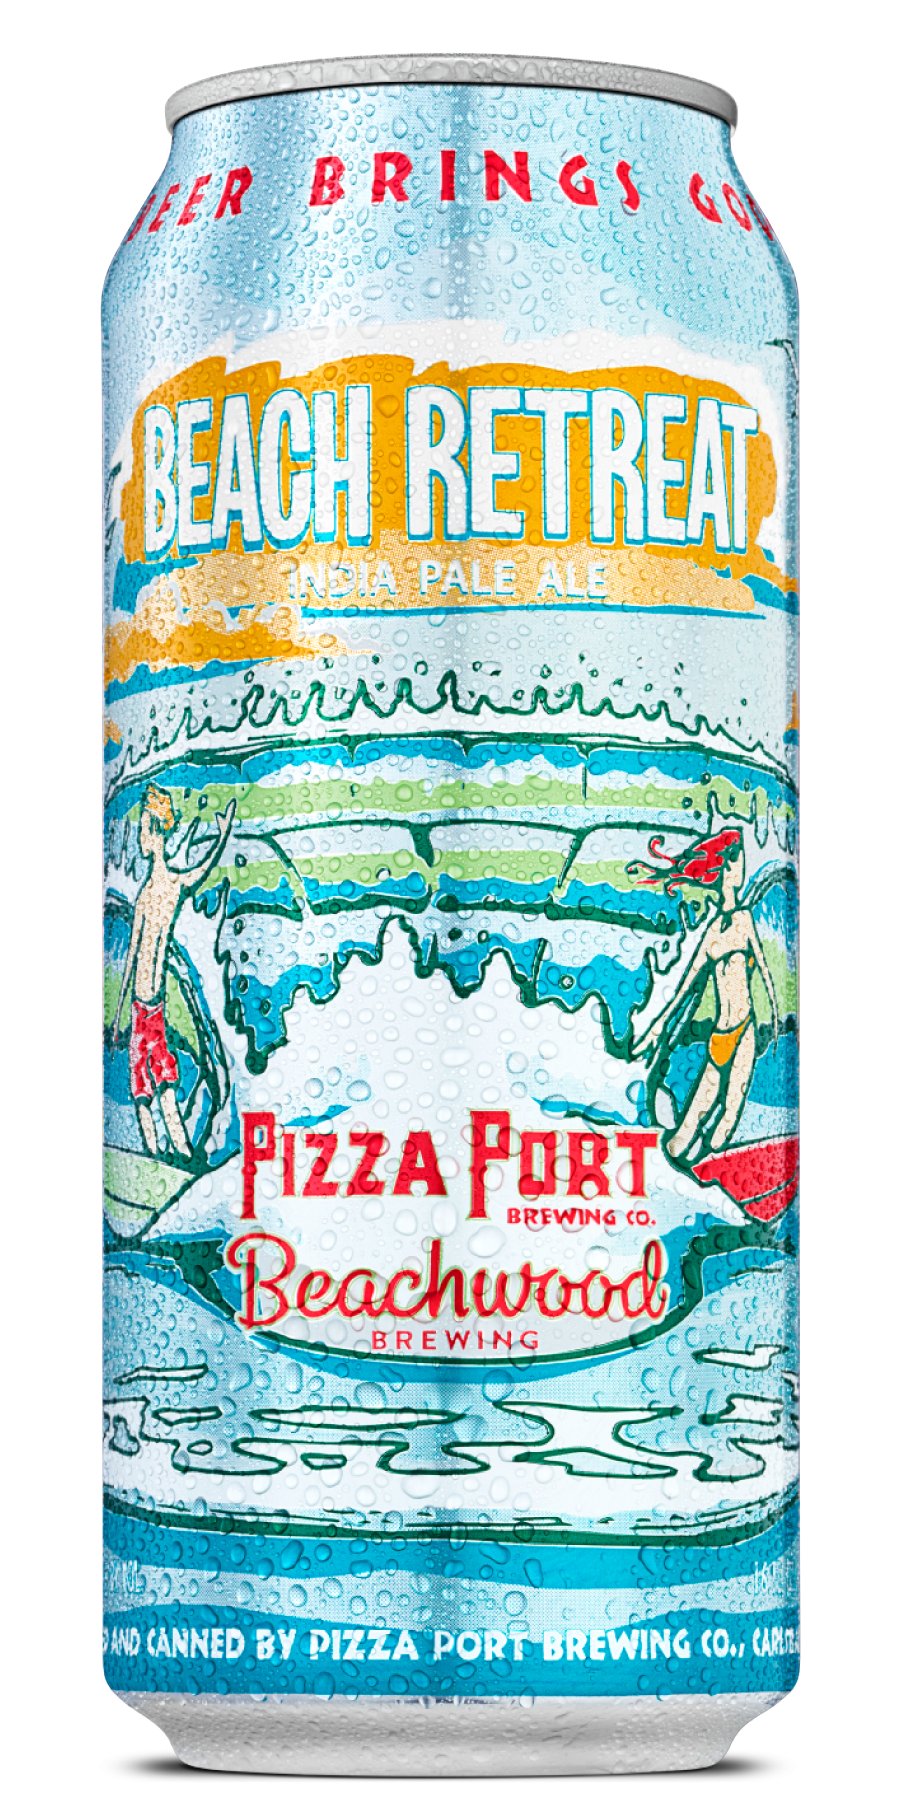 Buy Pizza Port & Beachwood Beach Retreat Online -Craft City